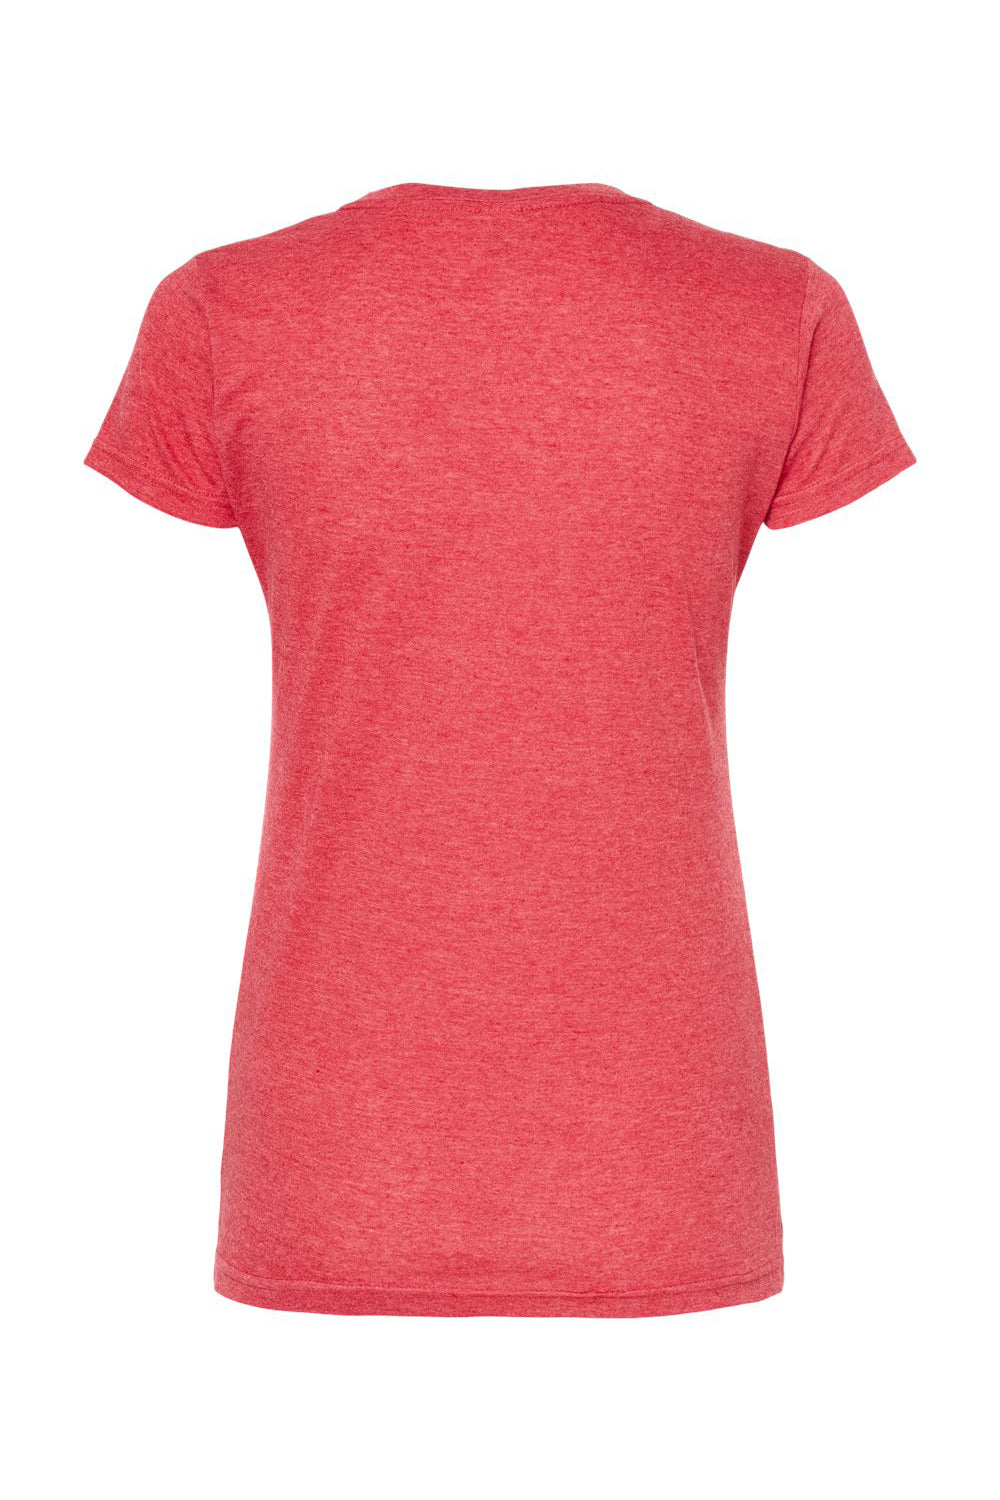 Tultex 240 Womens Poly-Rich Short Sleeve Crewneck T-Shirt Heather Red Flat Back